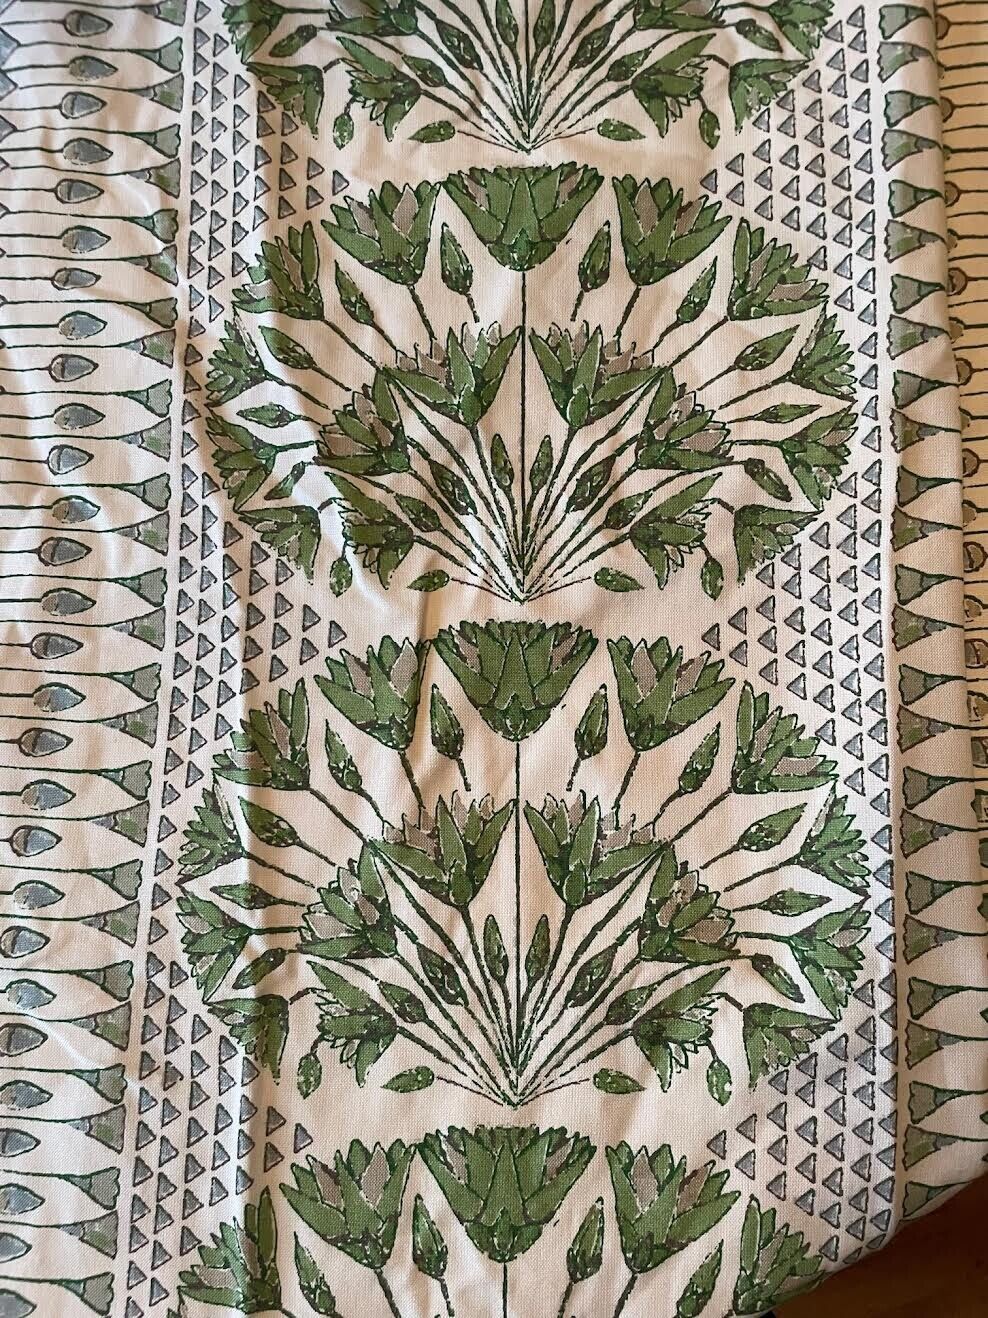 Thibaut Anna French “Cairo” Green White Fabric Piece